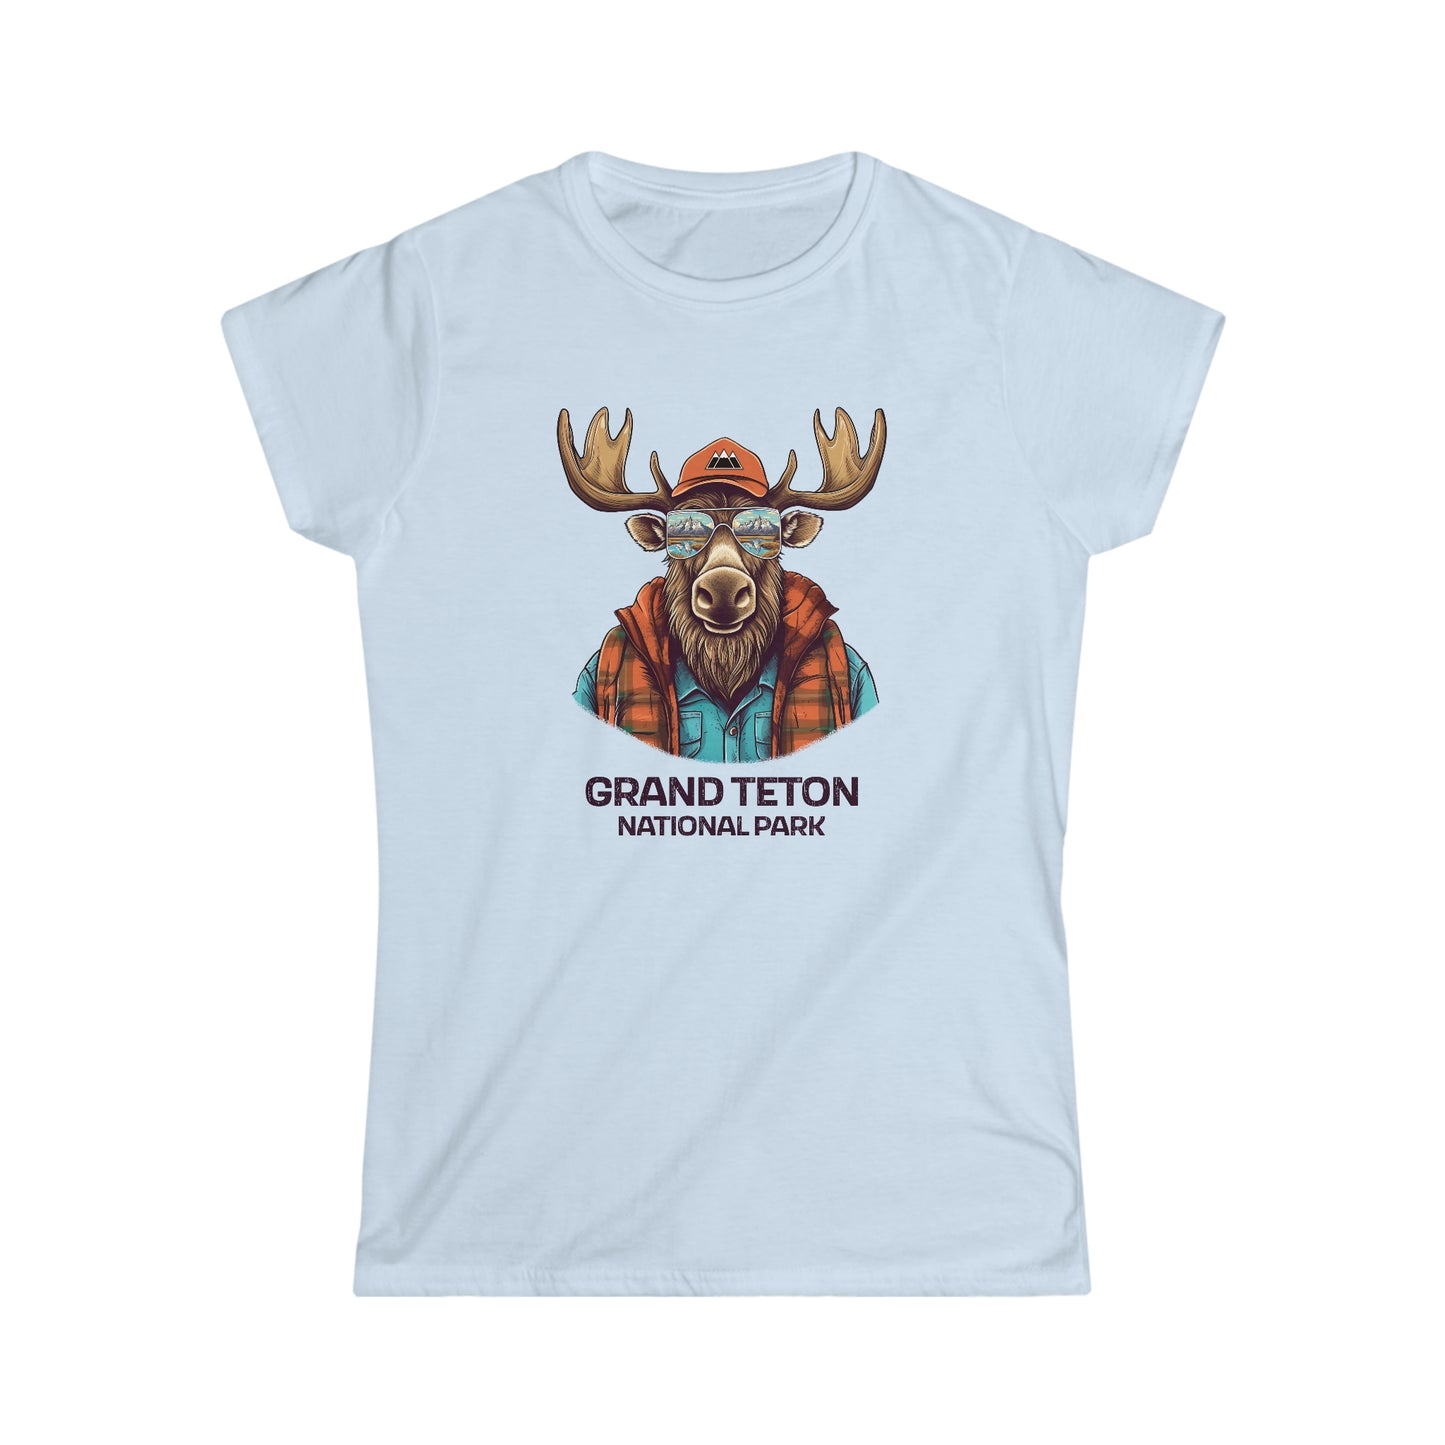 Grand Teton Denali National Park Women's T-Shirt - Cool Moose